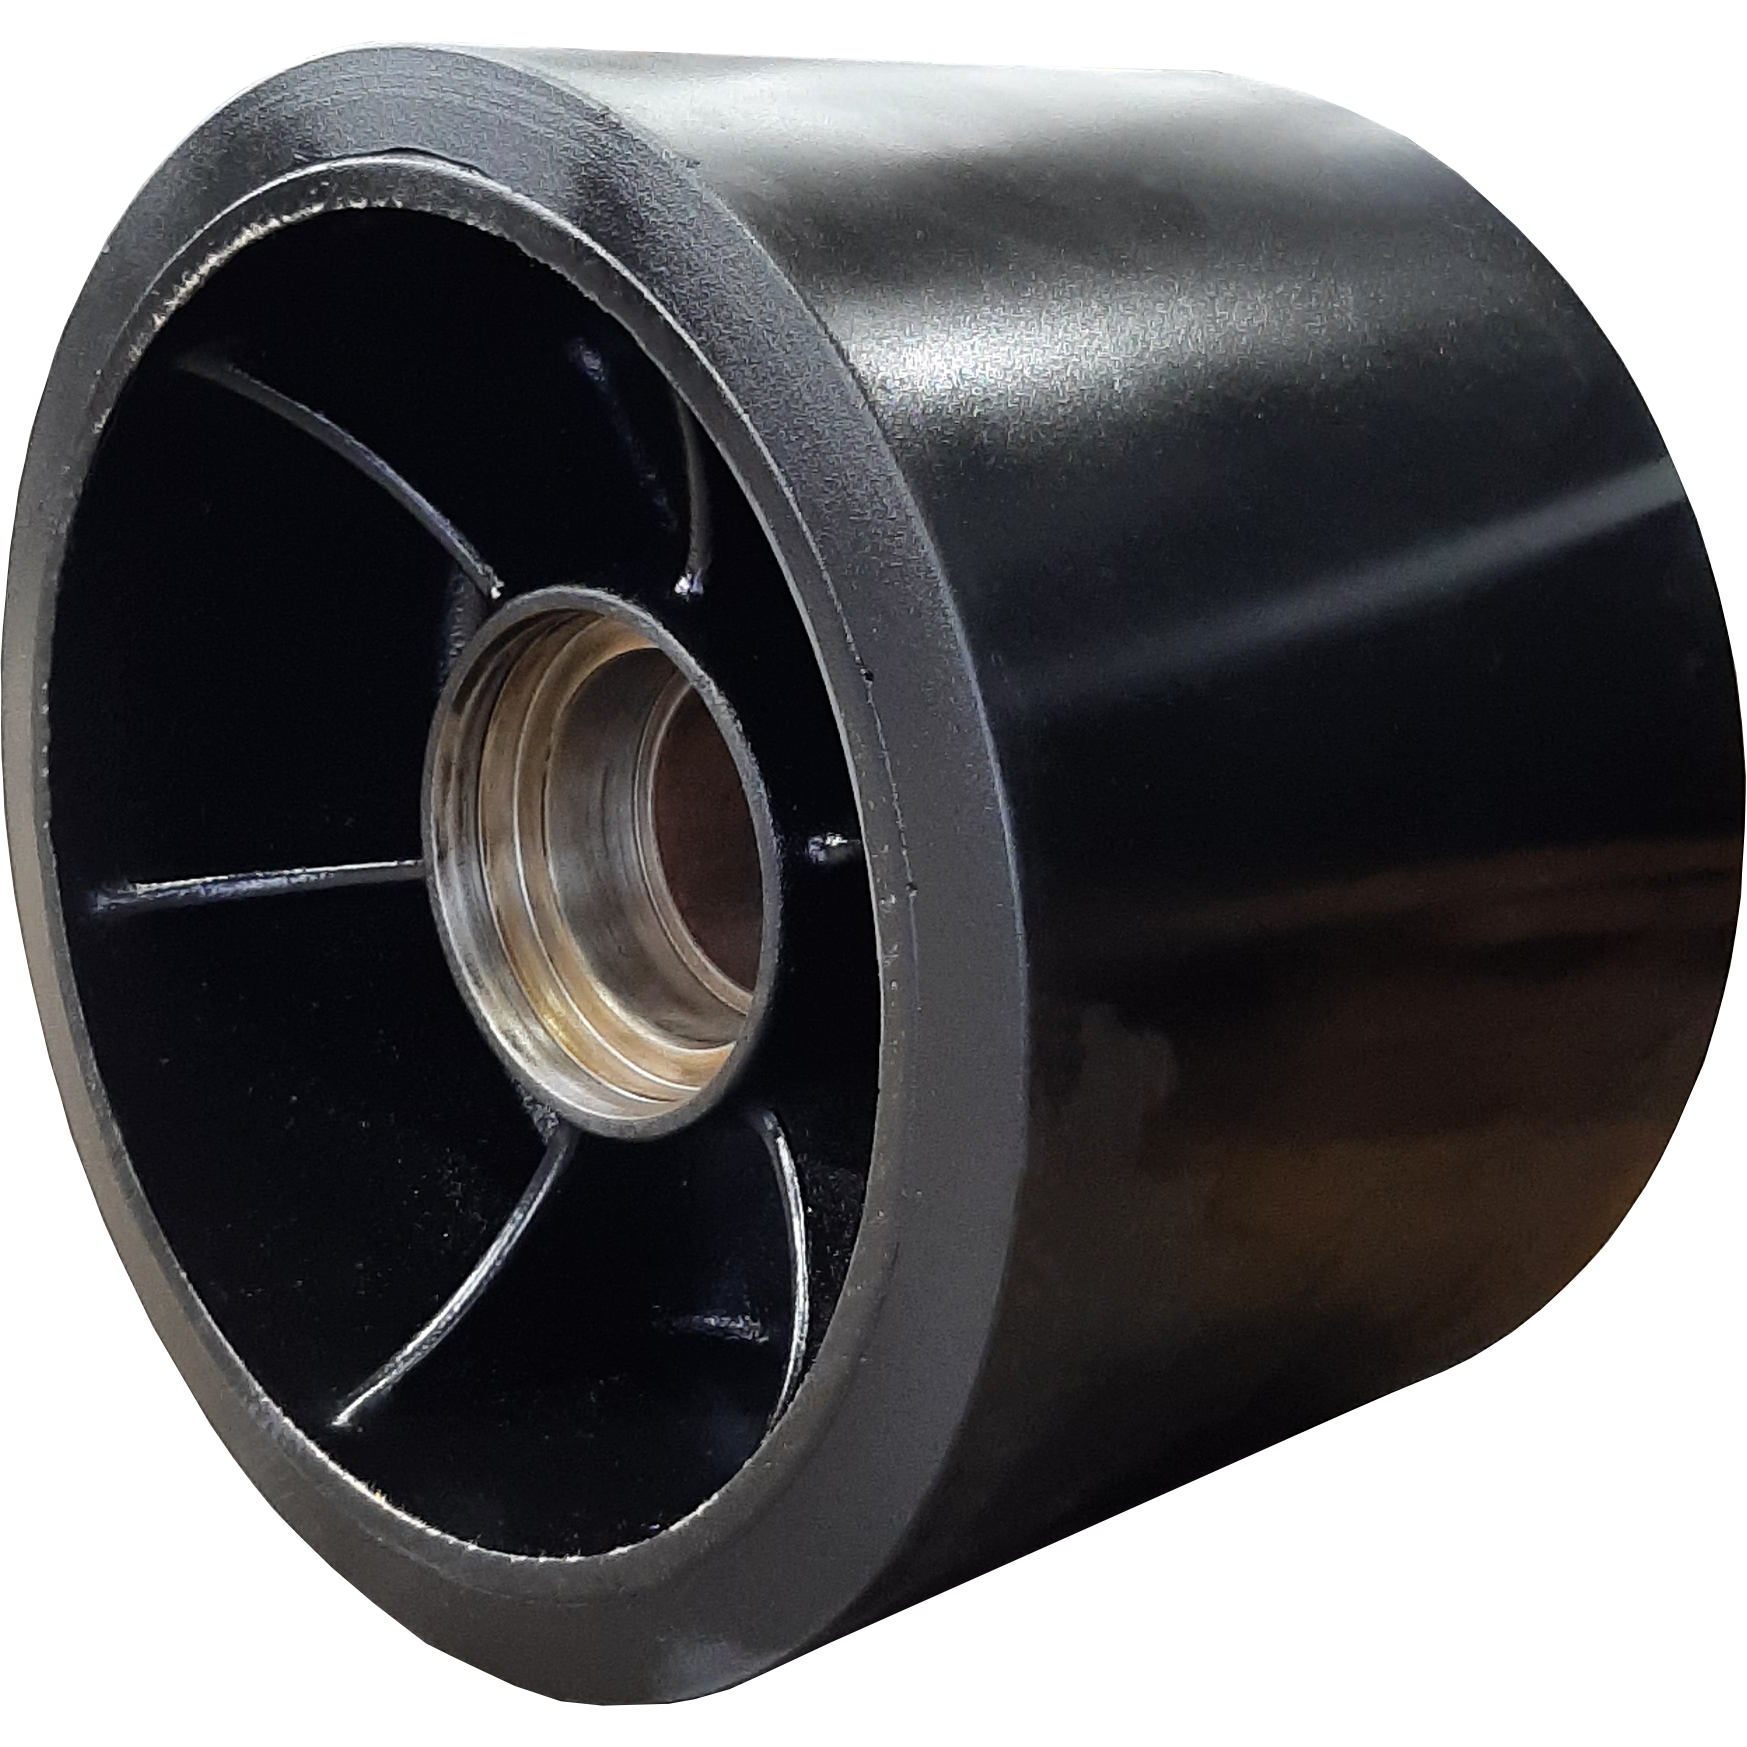 Example image for Case STX mid-roller rebuild (130mm spigot diameter)